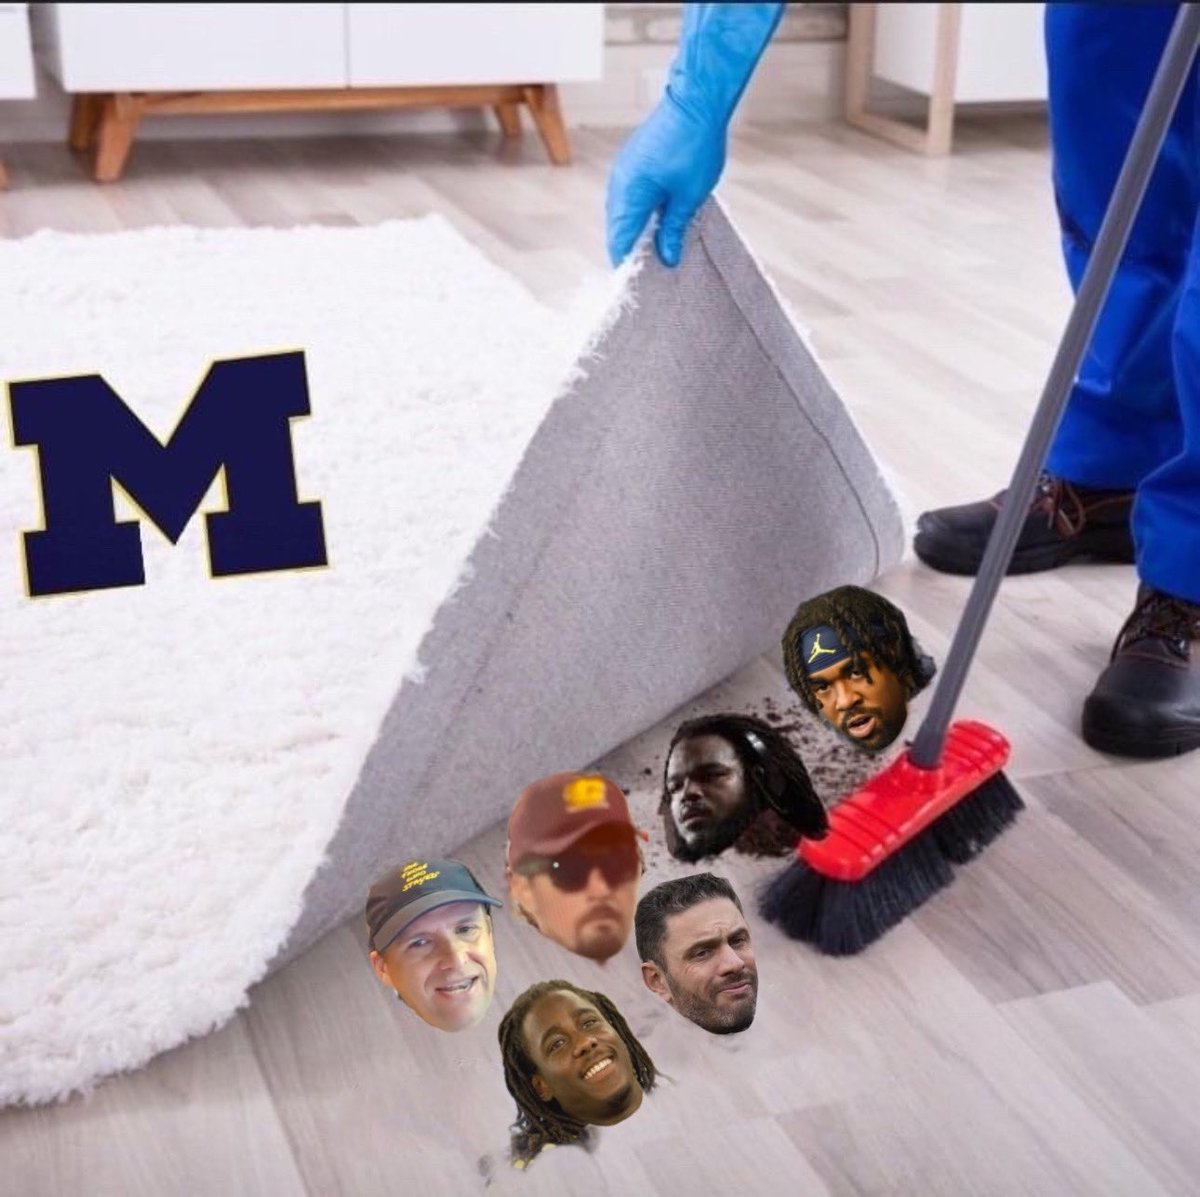 Damn, Michigan’s gonna need a bigger rug soon